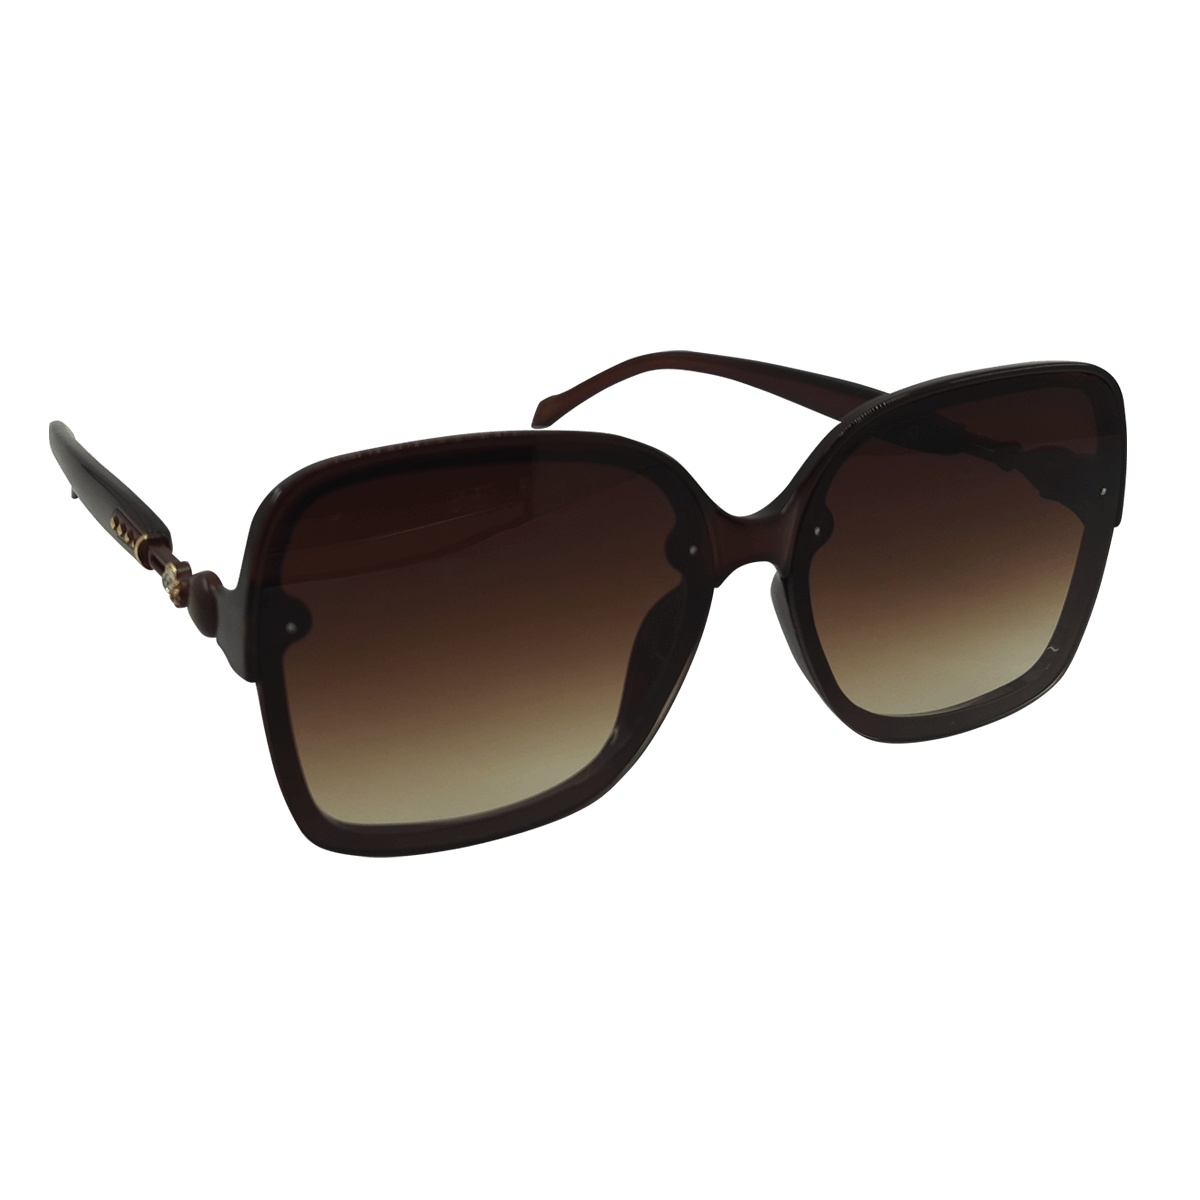 Rayban G614 Clubmaster Sunglasses